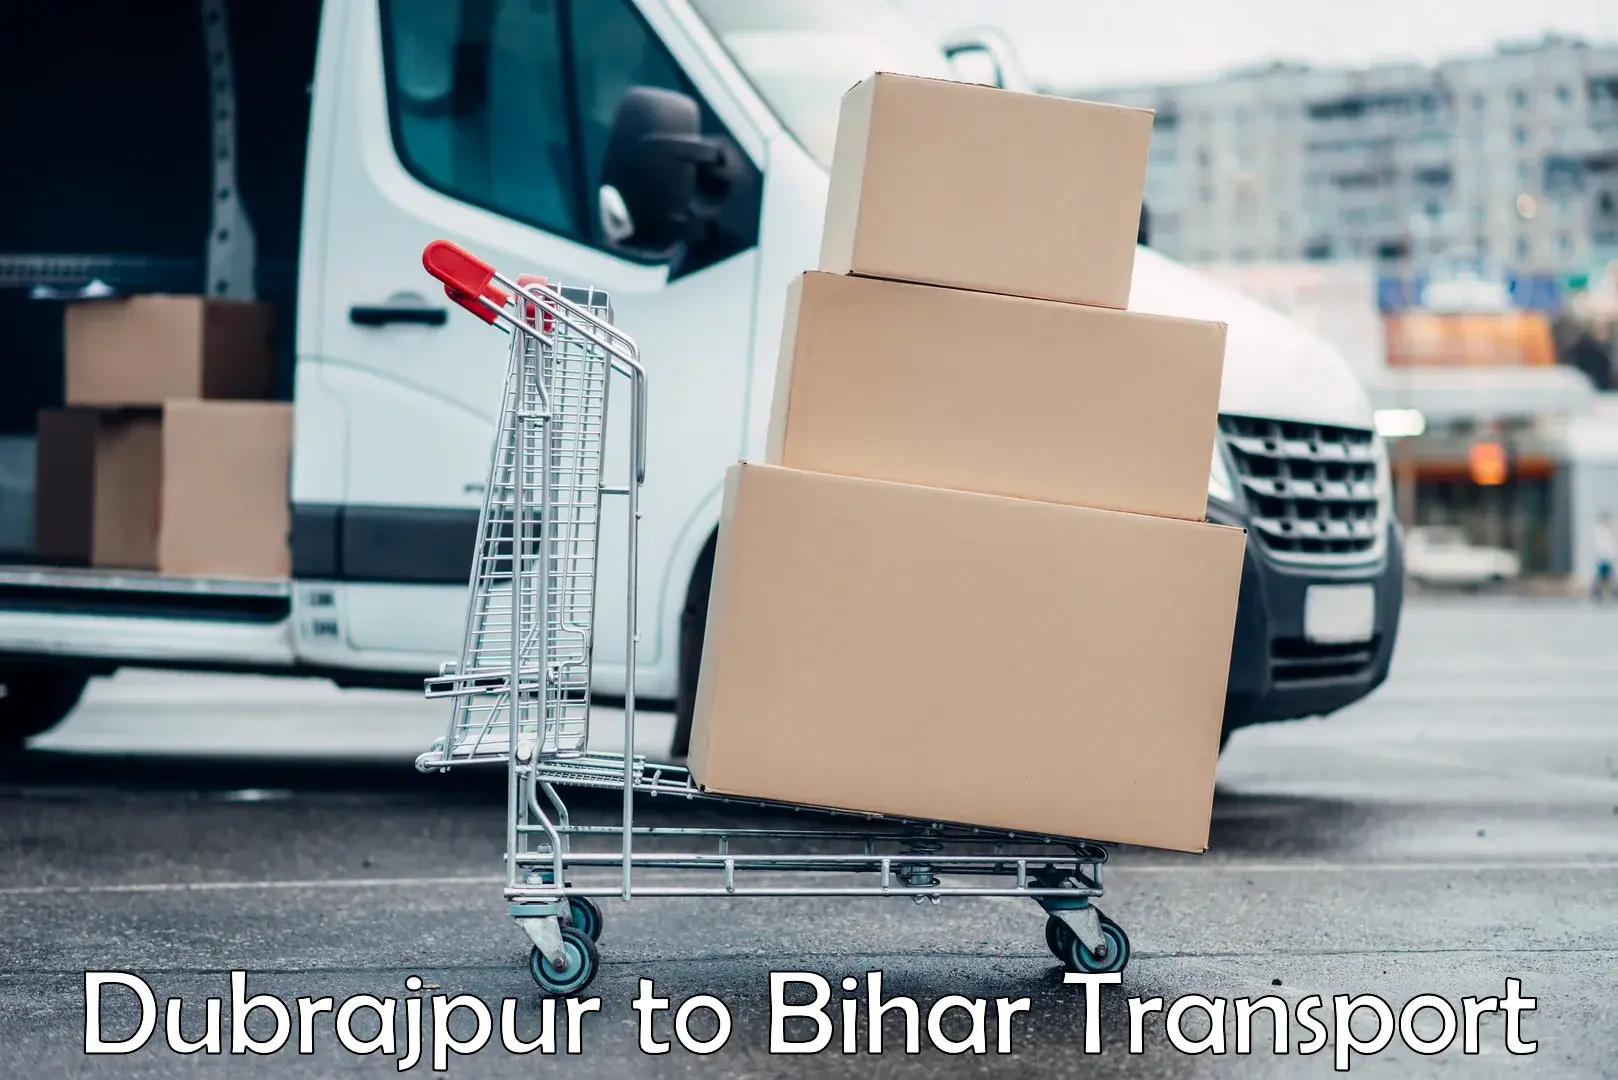 Goods delivery service Dubrajpur to Aurangabad Bihar